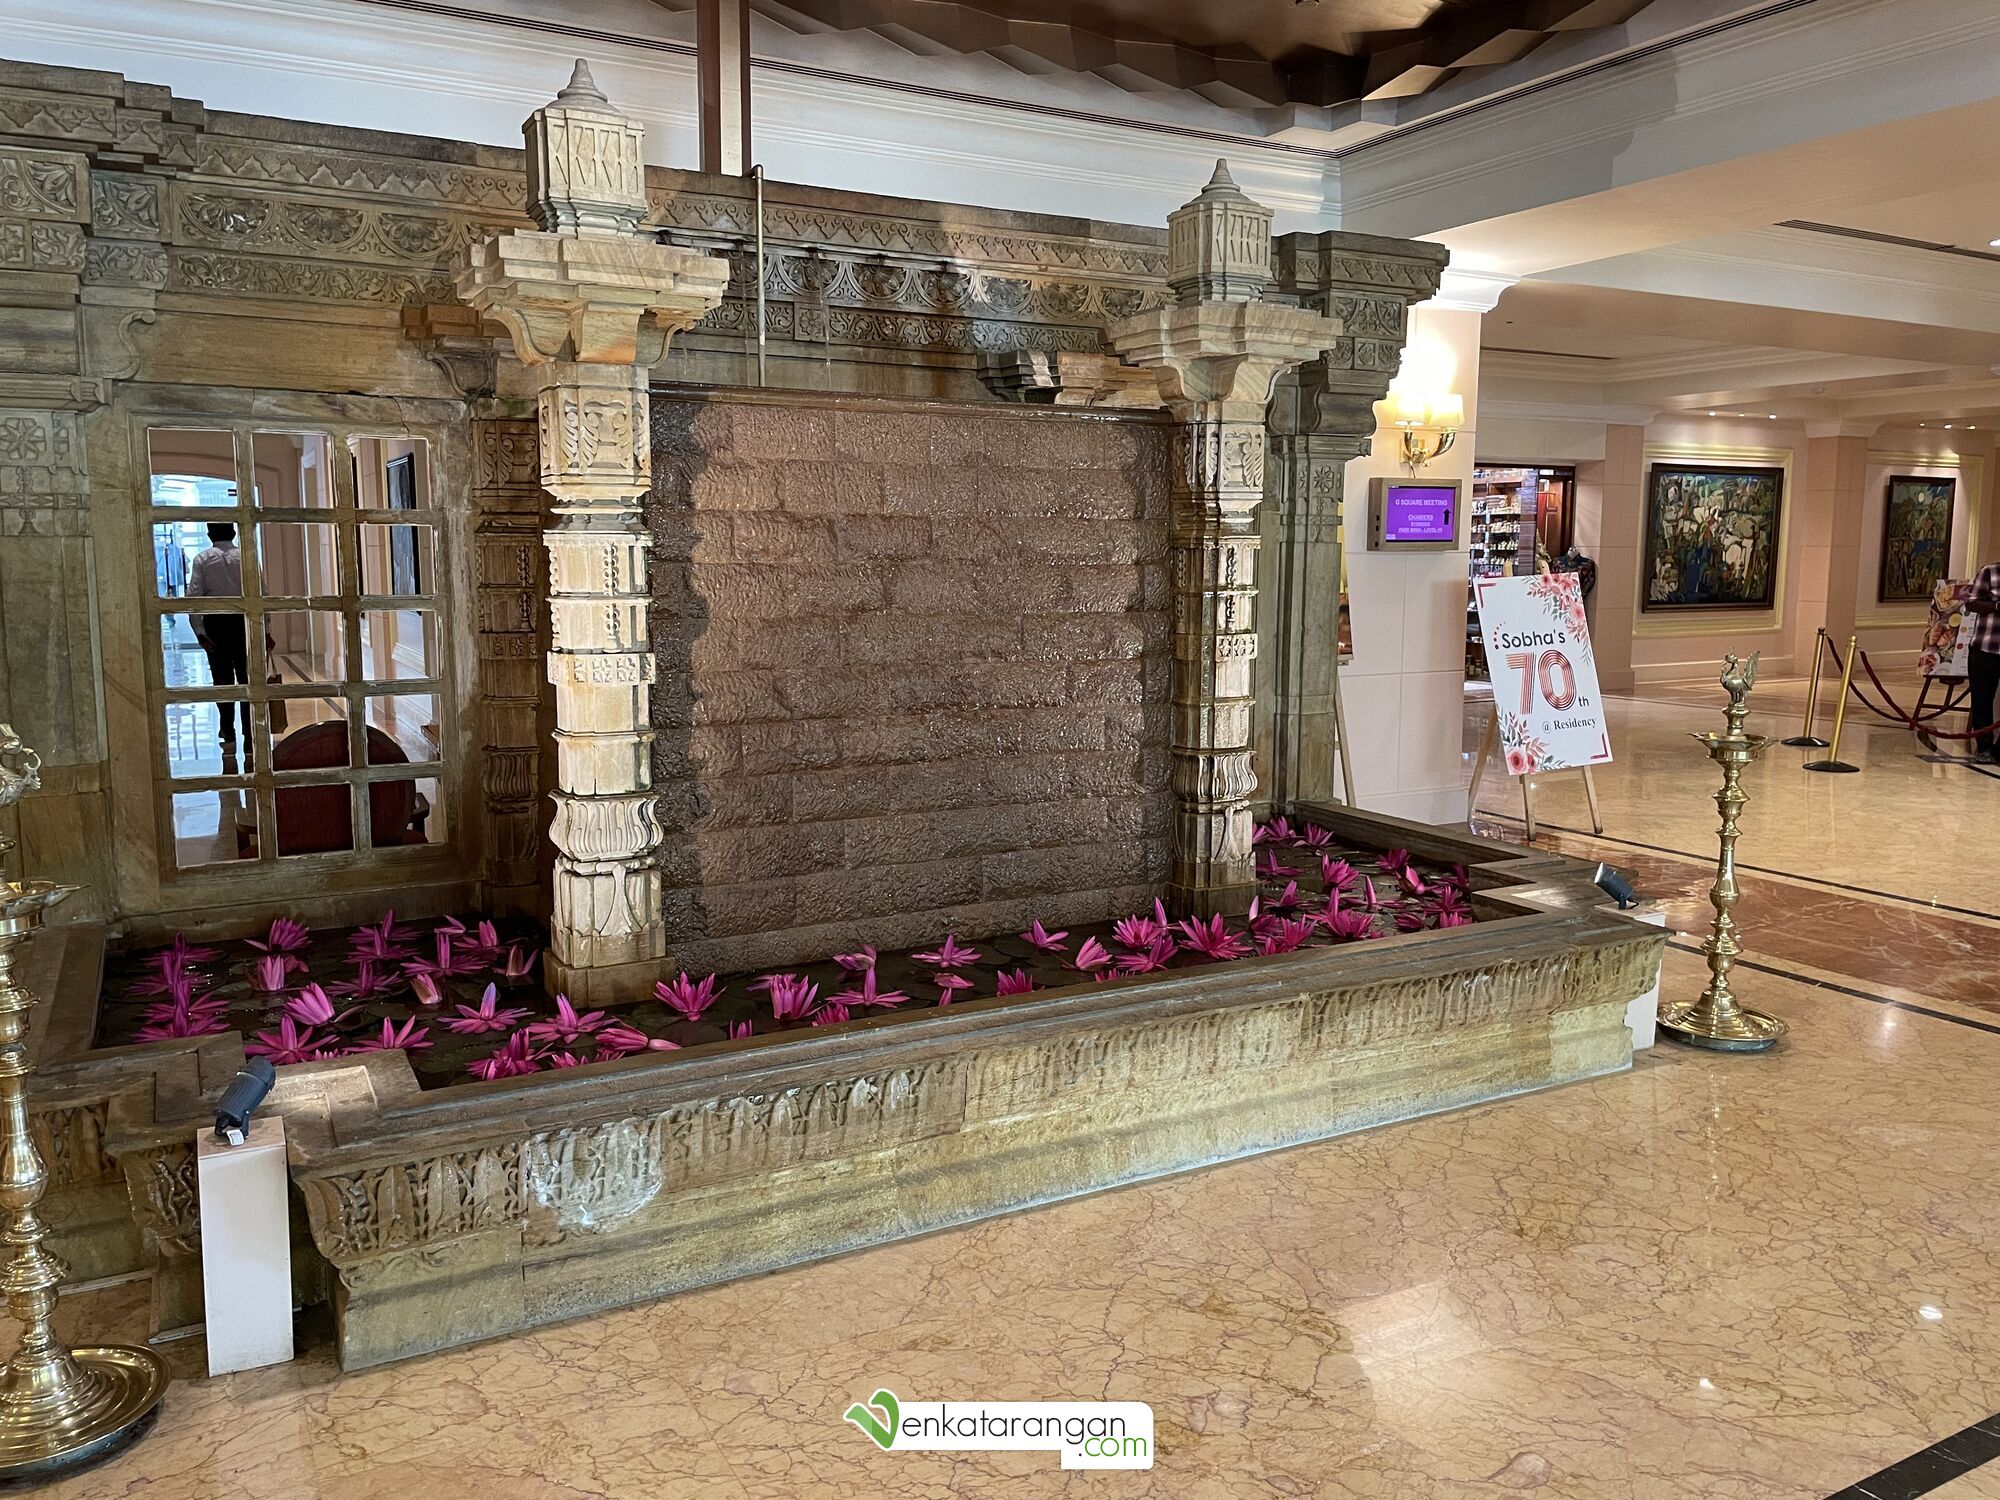 Entrance of Crowne Plaza, Chennai; erstwhile Adyar Park Hotel